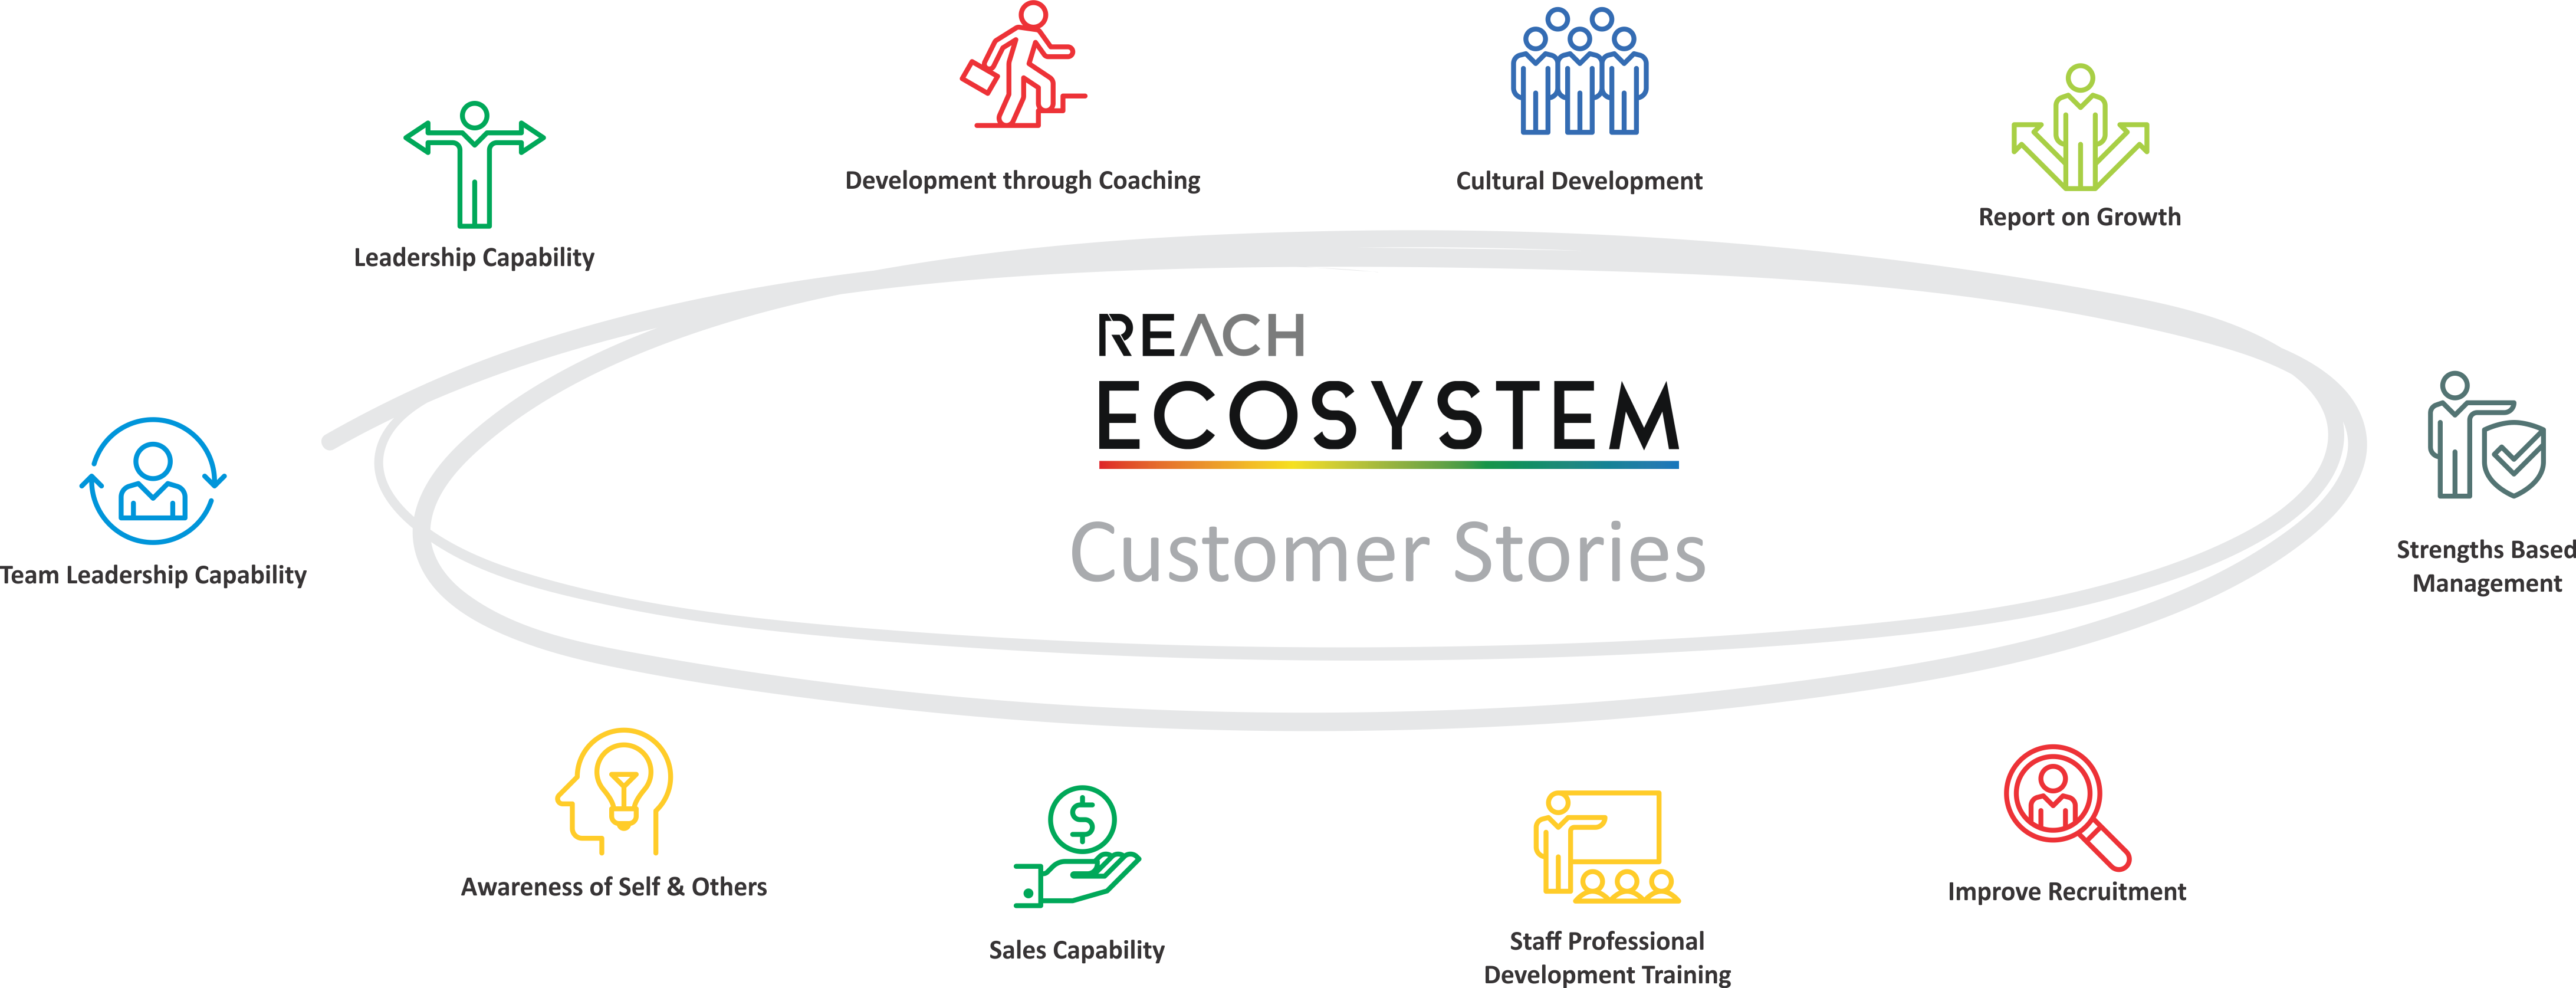 REACH Ecosystem Professional Development Tools Client Stories